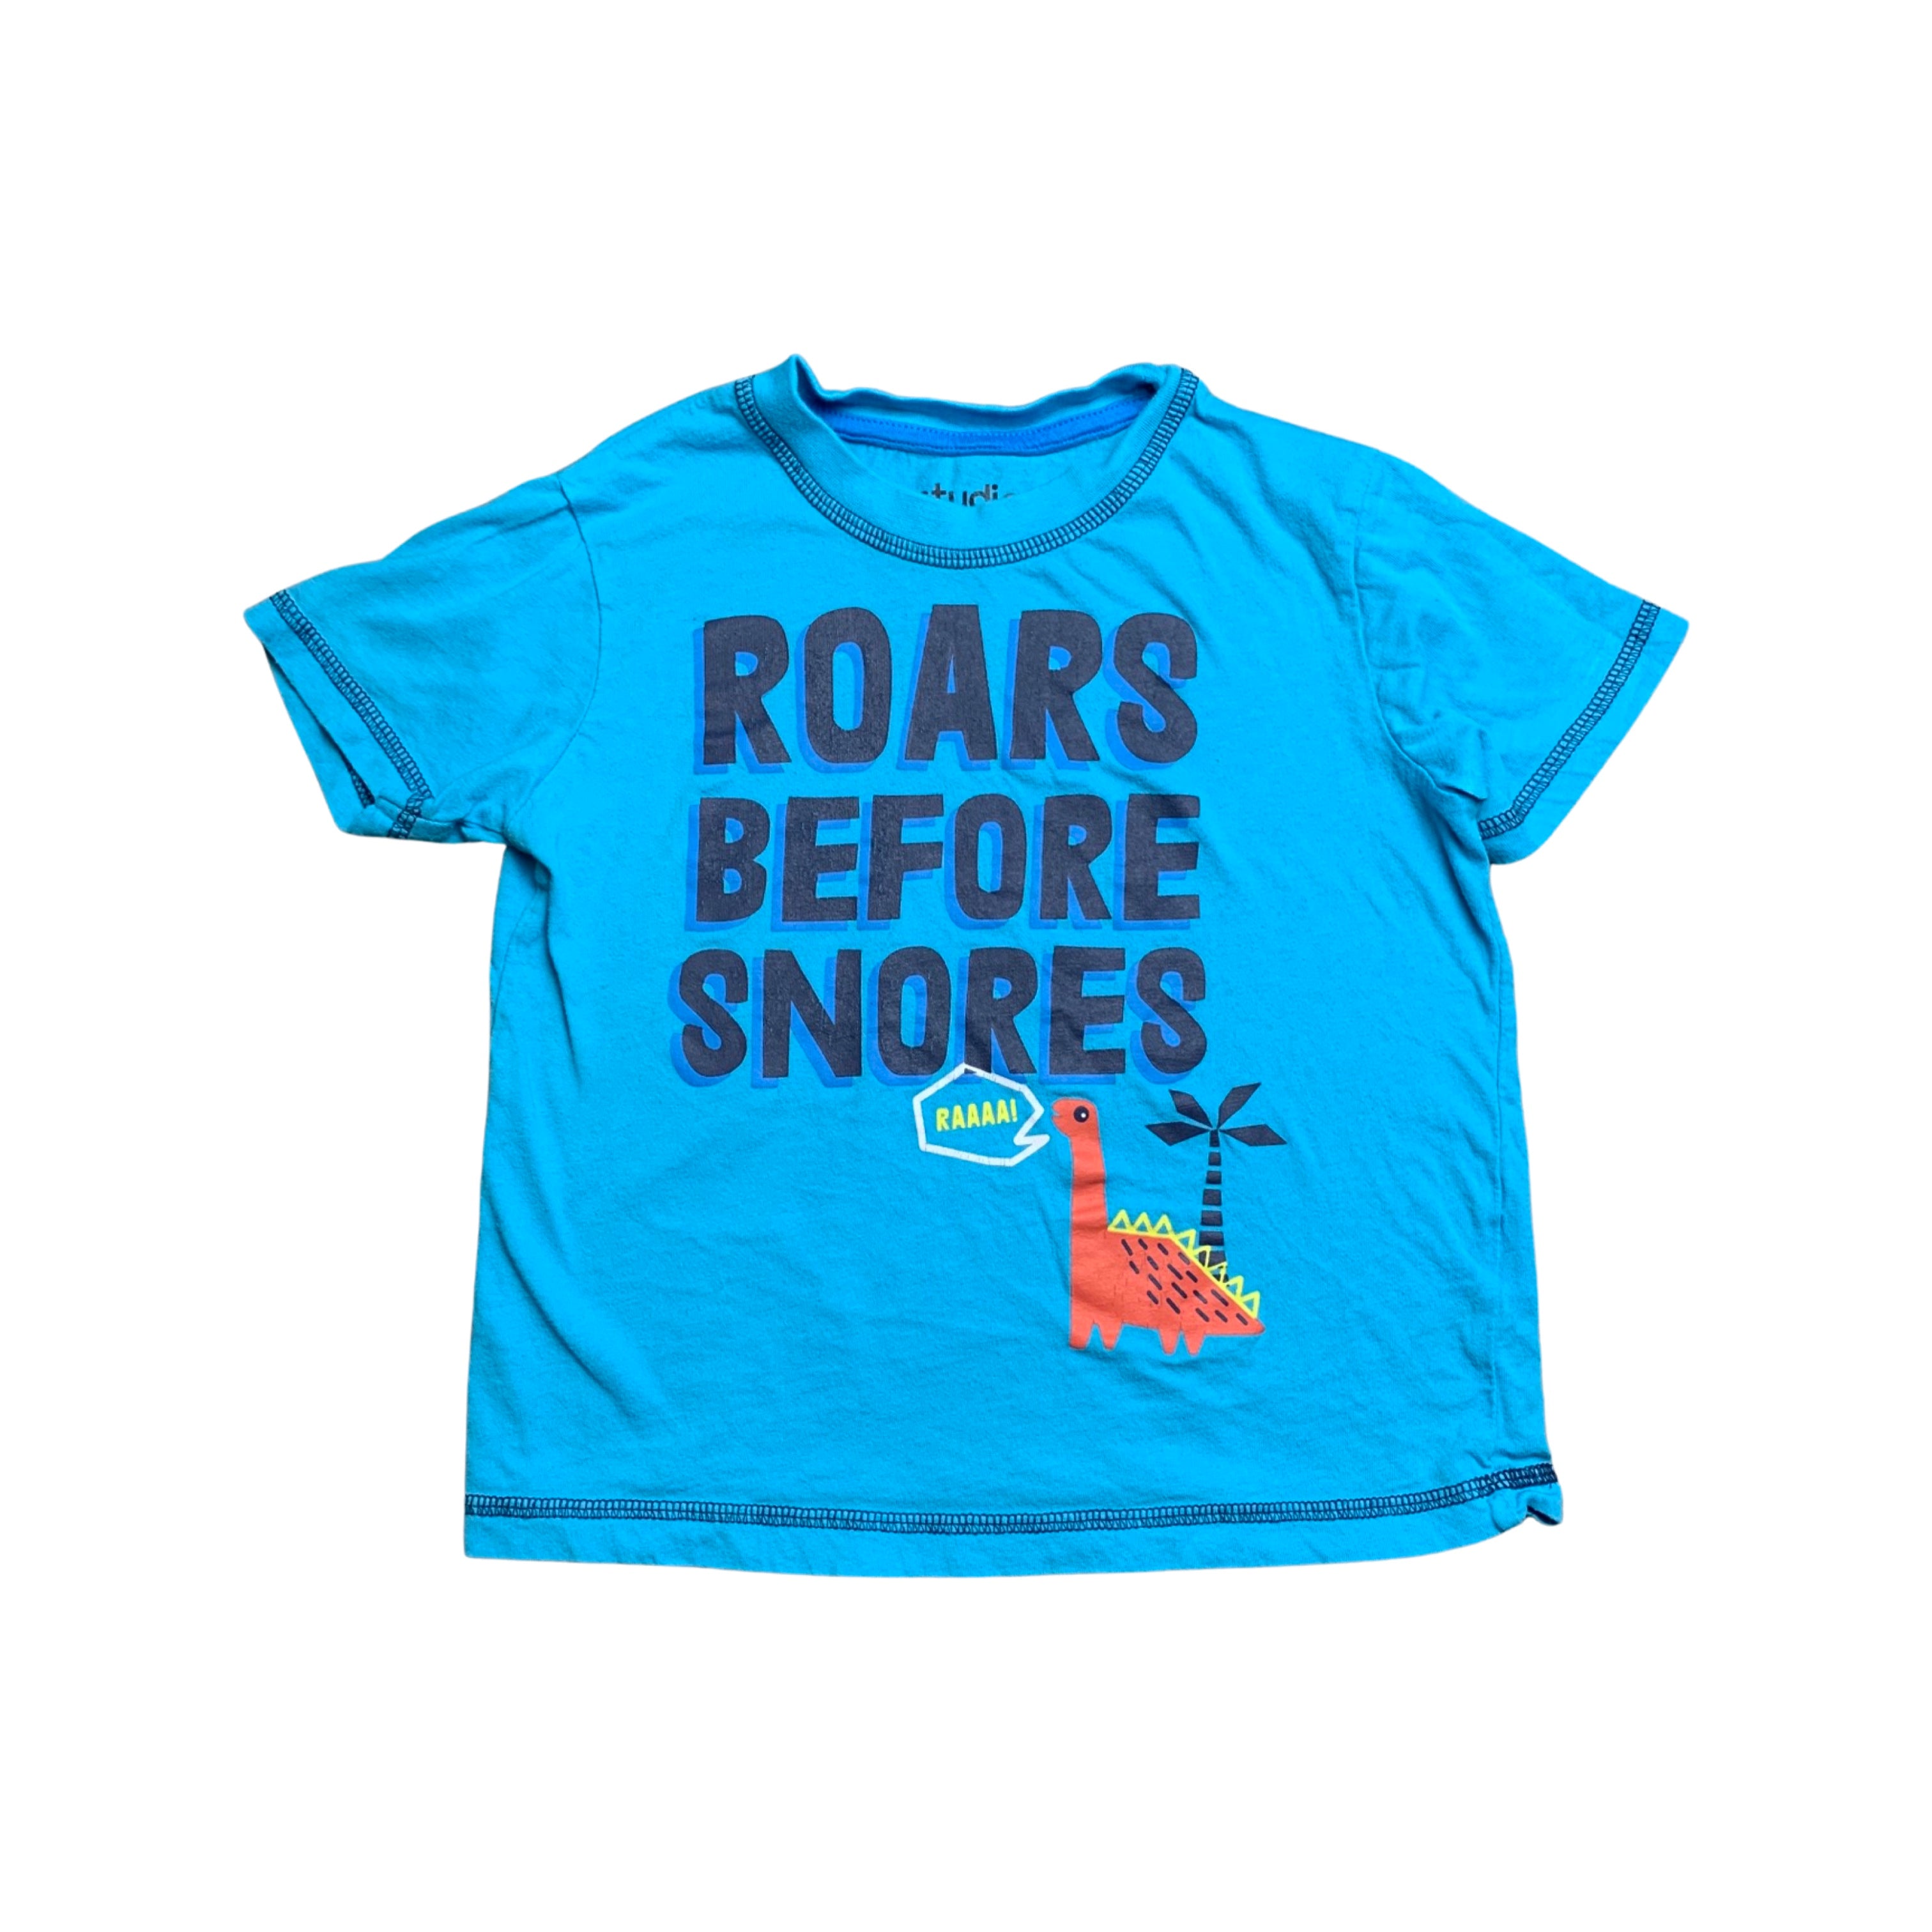 Studio 'Roars Before Snores' Pyjama T Shirt Boys 5-6 Years